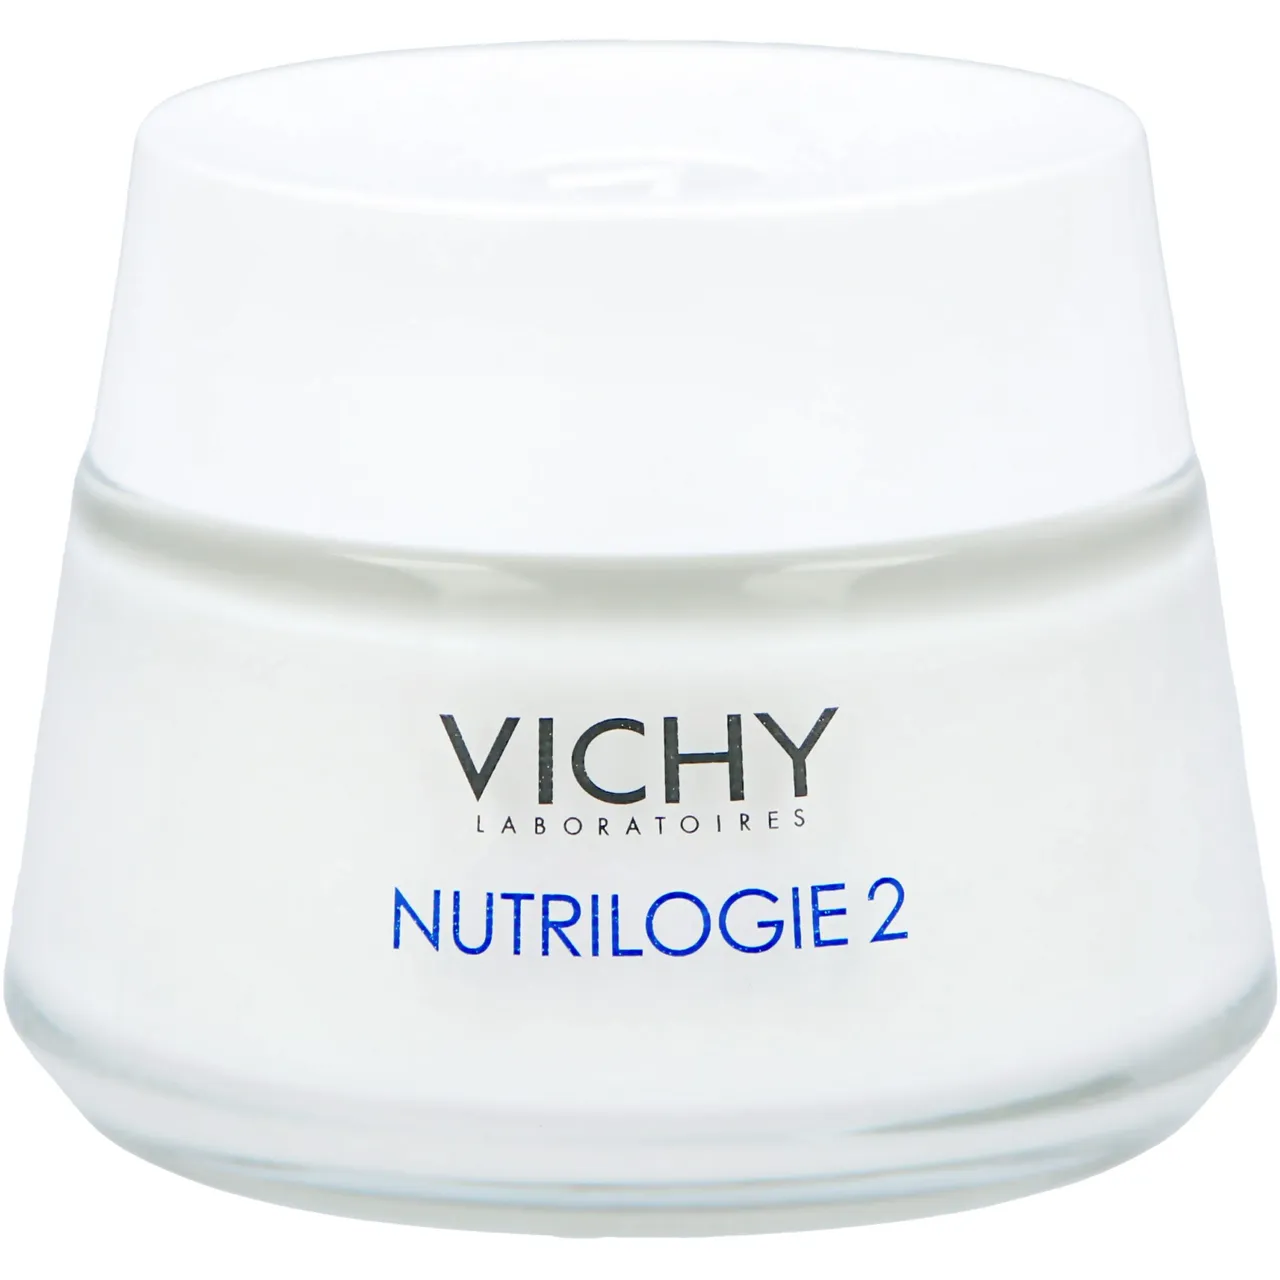 VICHY Nutrilogie 2 Face Cream 50 ml